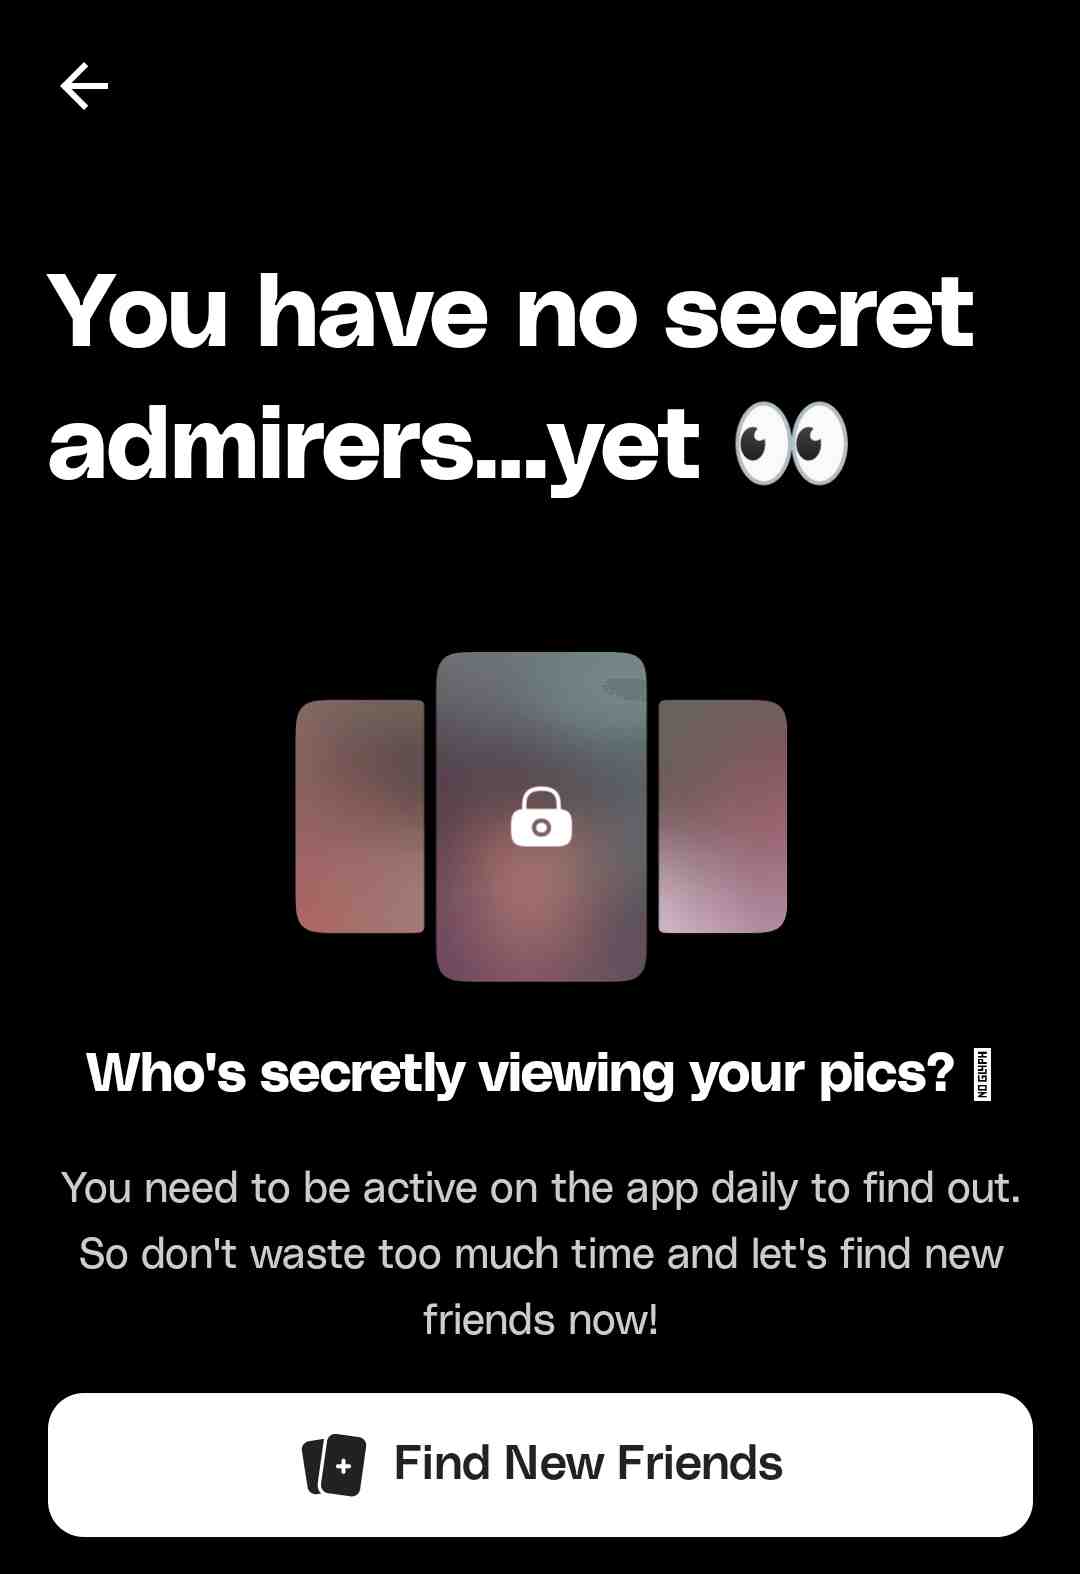 Wizz app secret admirers